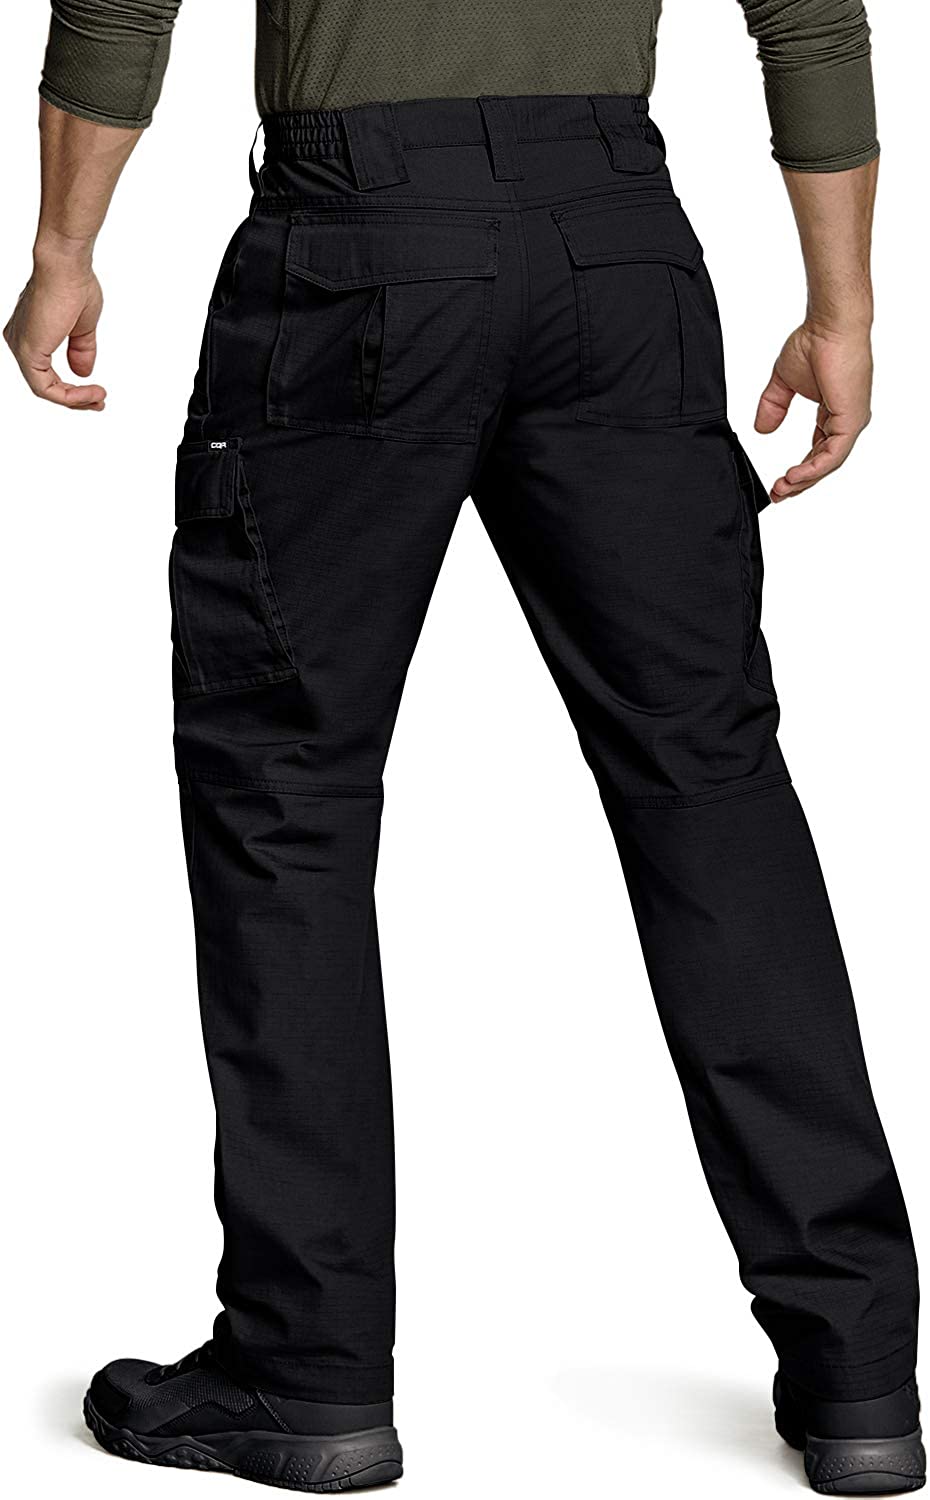 CQR Men's Tactical Pants, Water Repellent Ripstop Cargo Pants ...